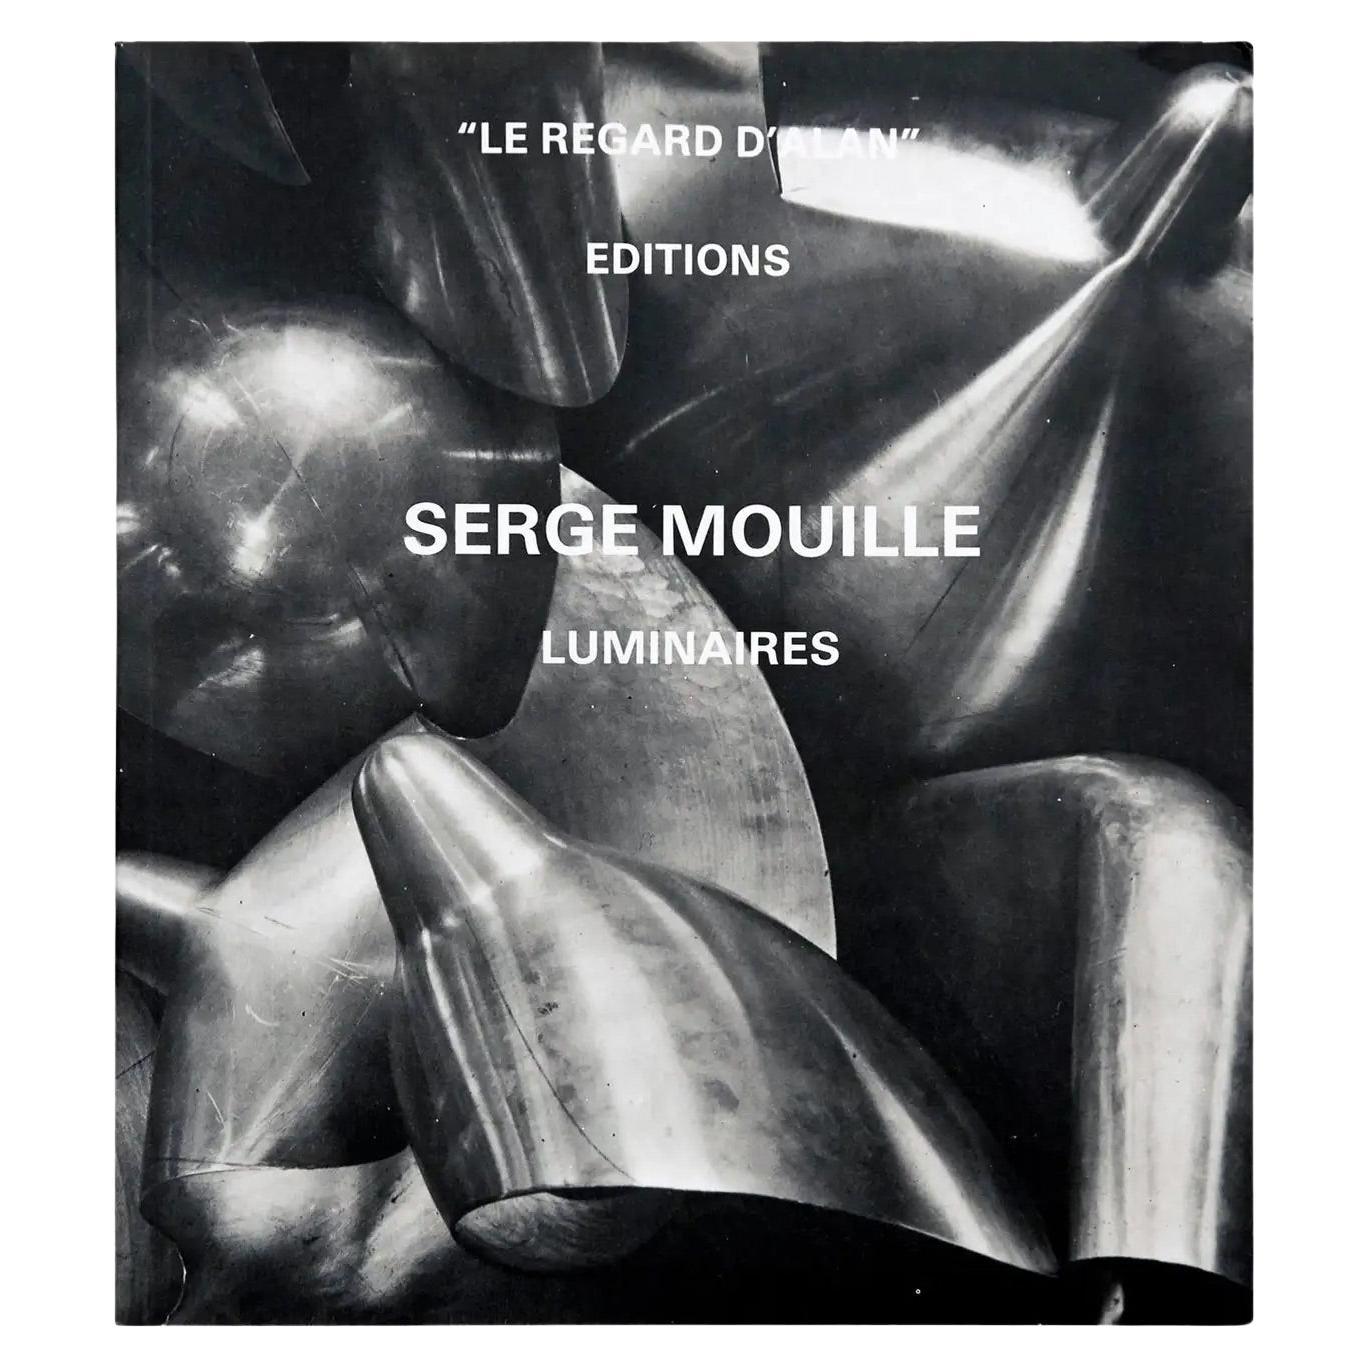 Livre « Le Regard D'alan » de Serge Mouille